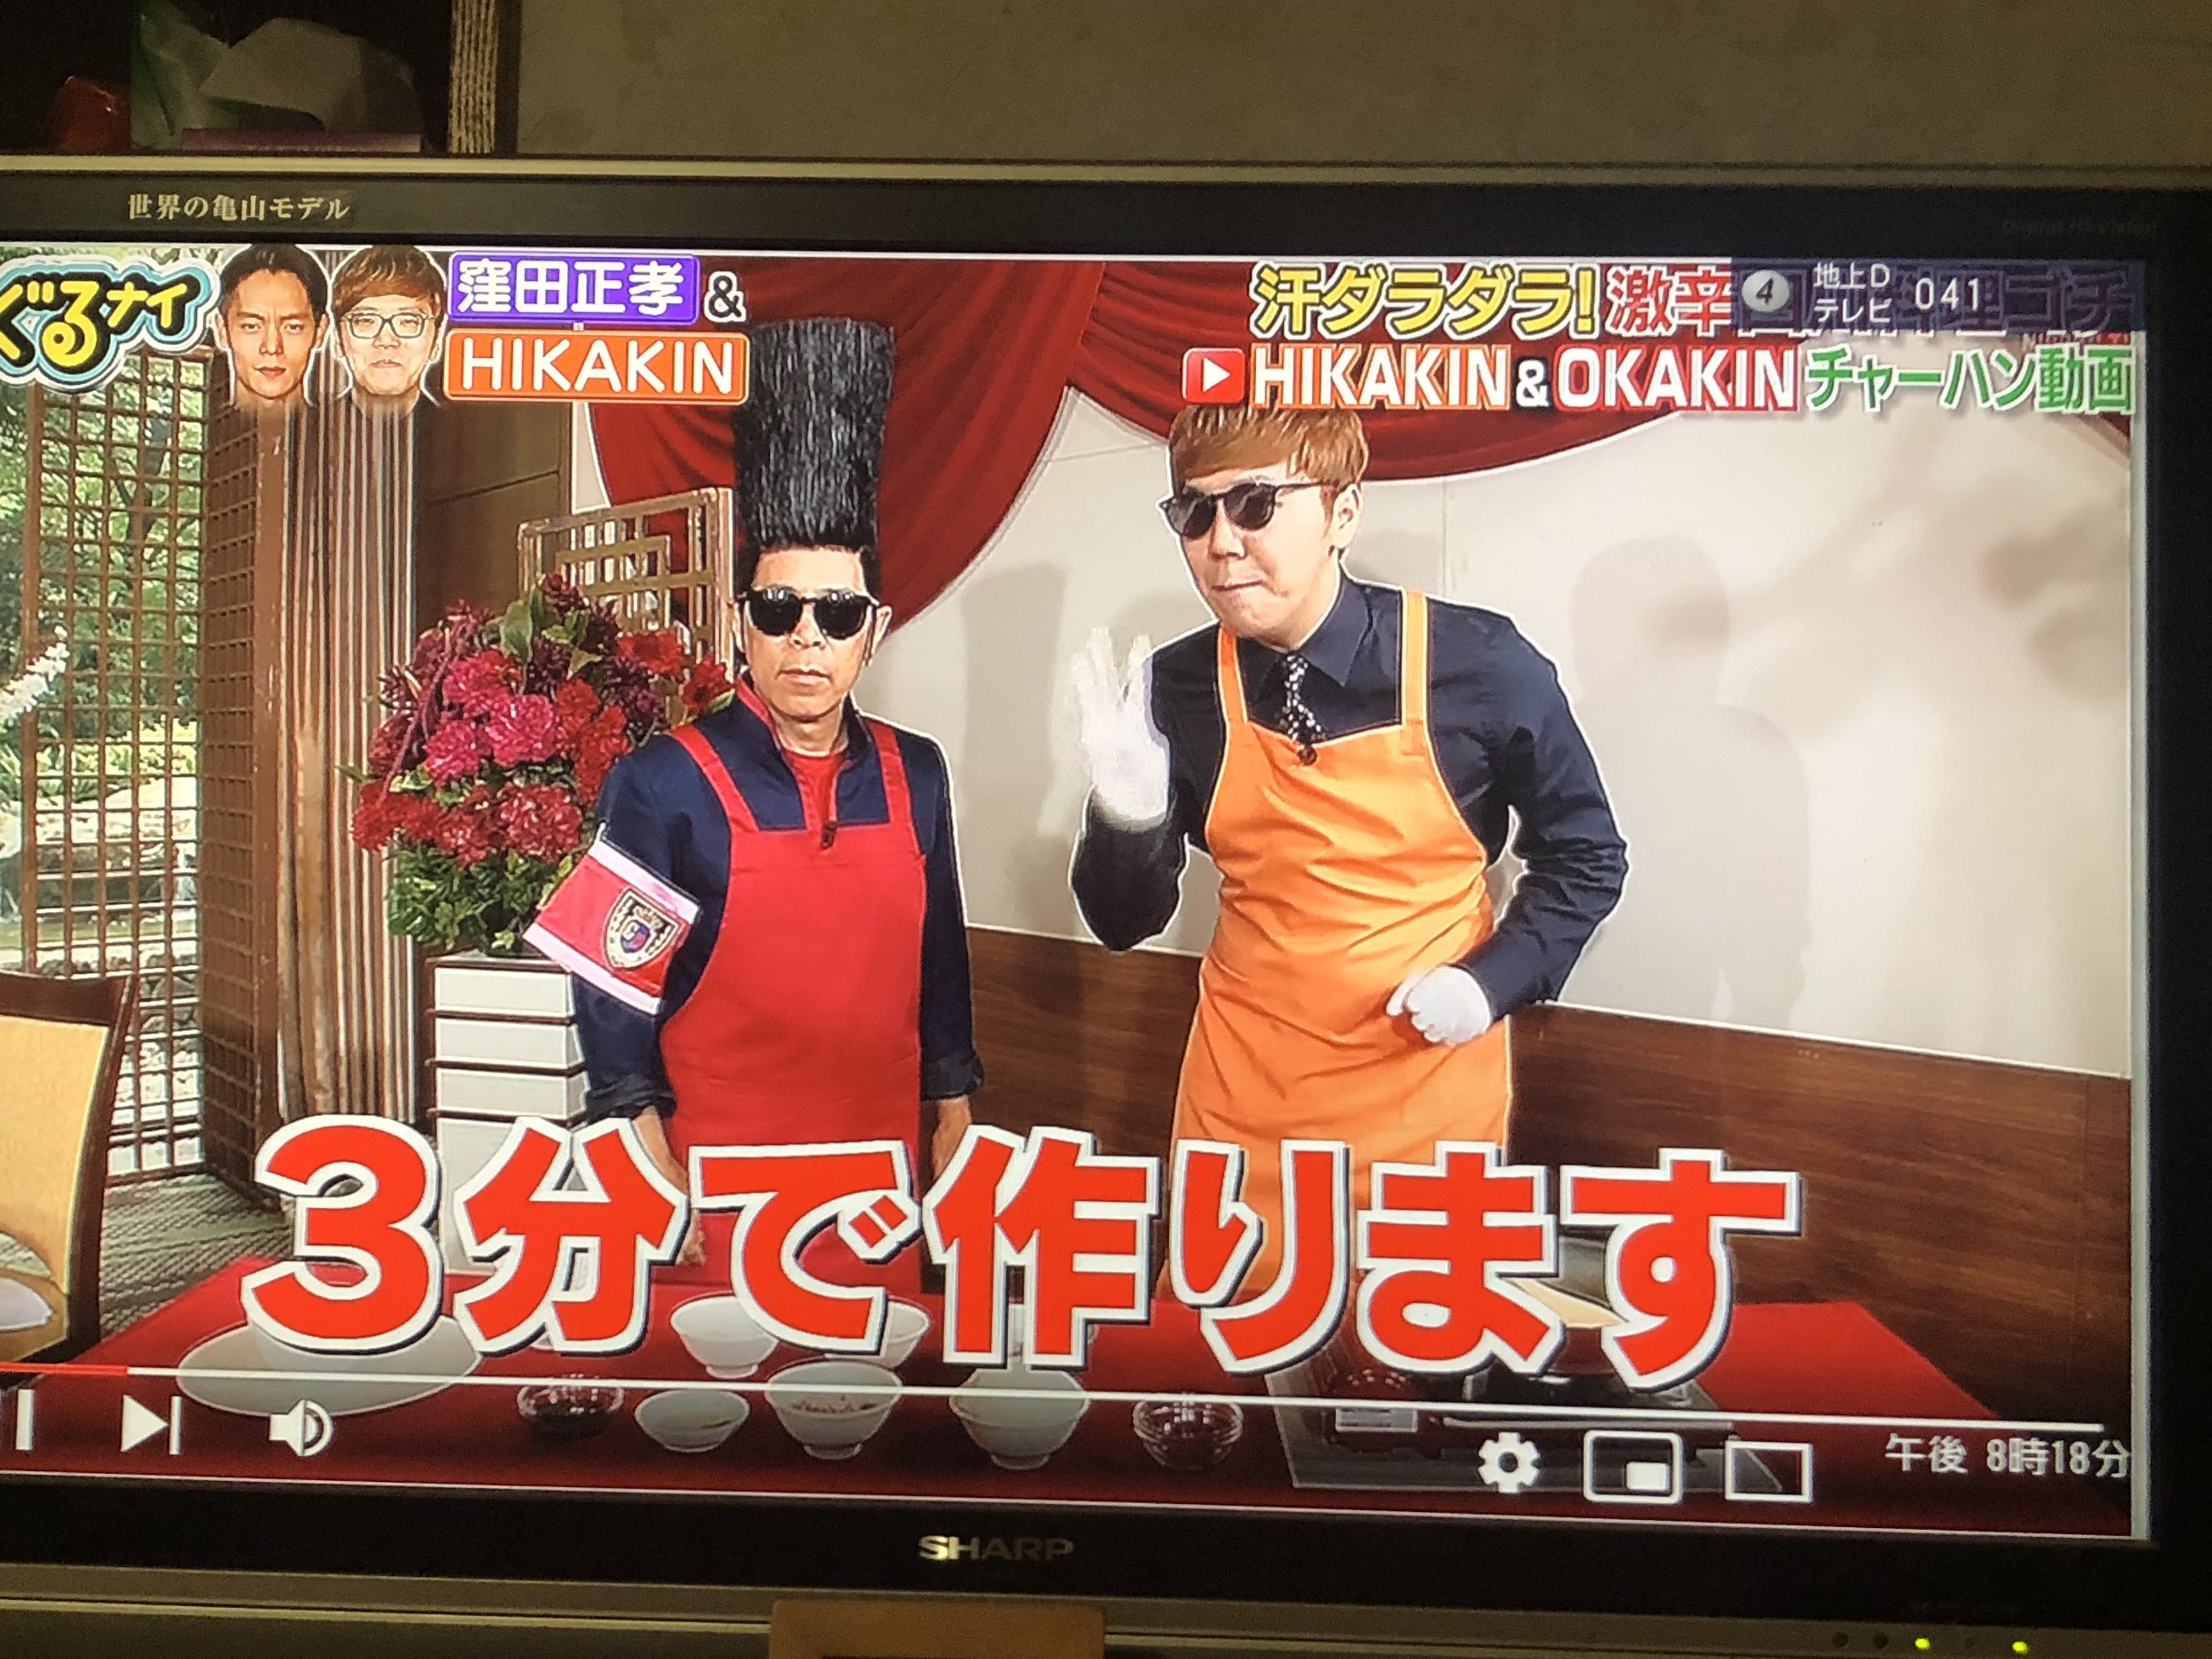 Hikakinとokakin 岡村隆史 が初コラボ 動画 オファーシリーズまとめ ぐるナイ Macoログ